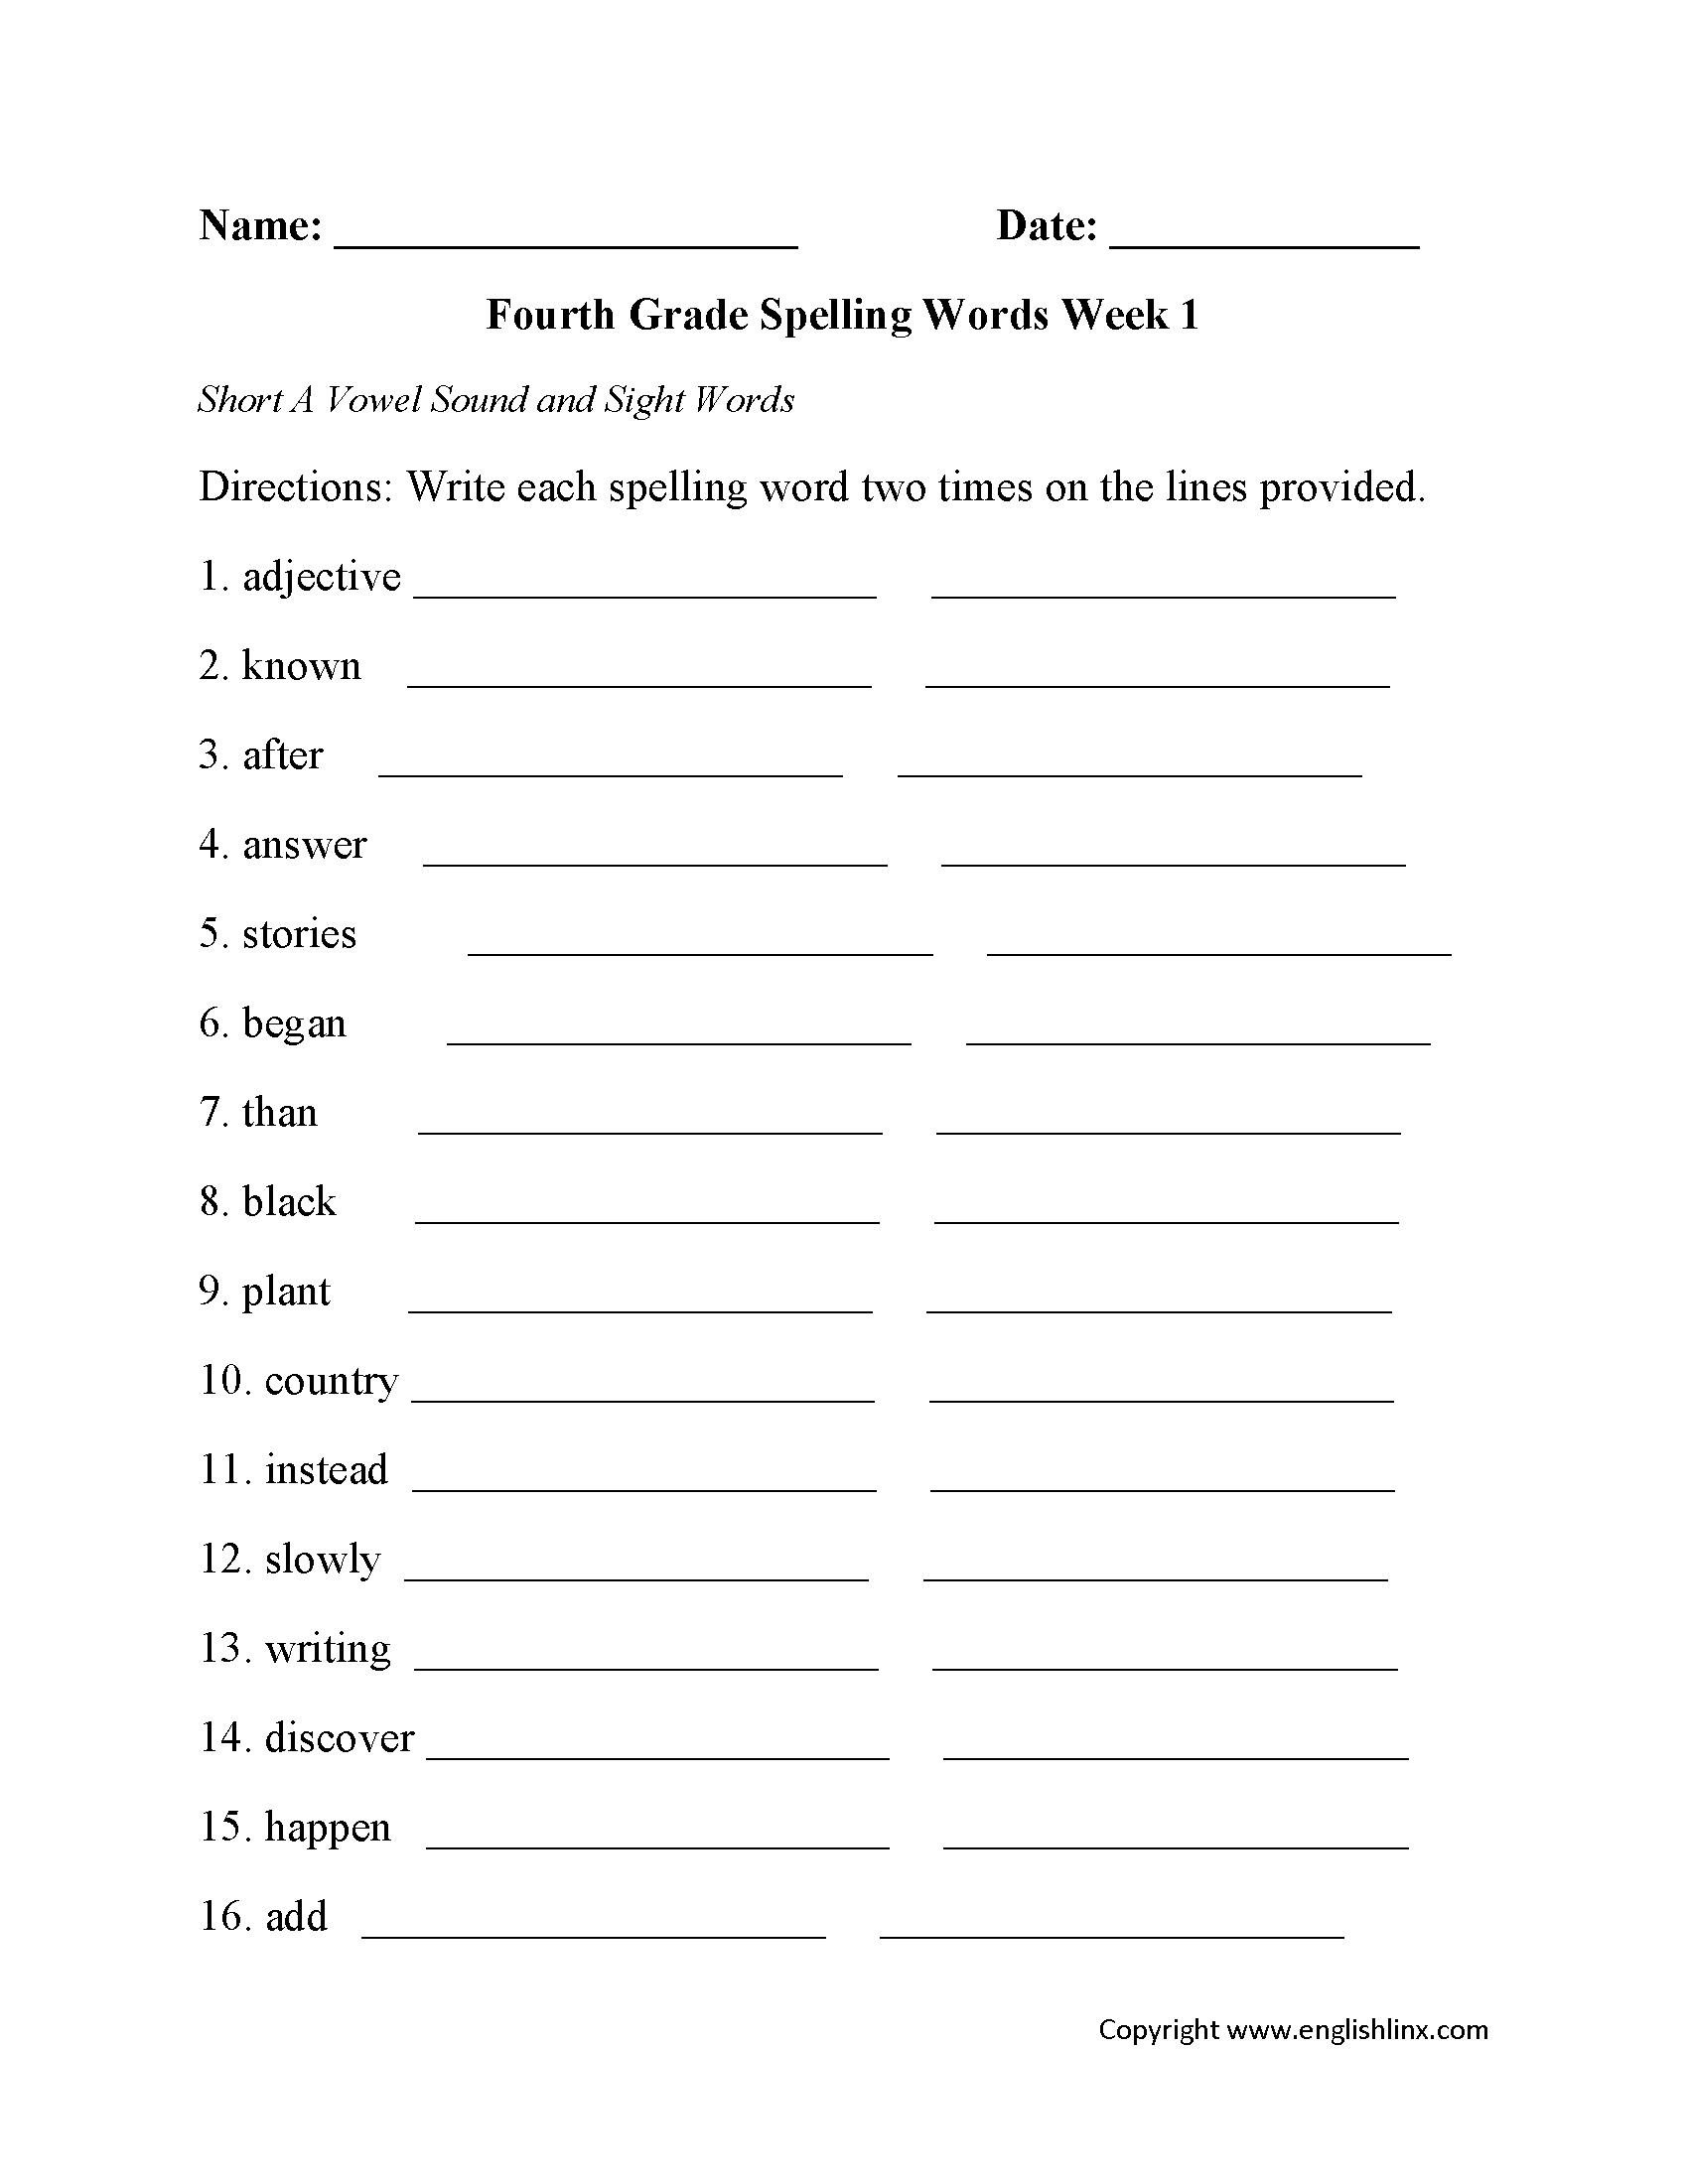 Spelling Worksheets  Fourth Grade Spelling Worksheets Also Free Printable Spelling Worksheets For Grade 1